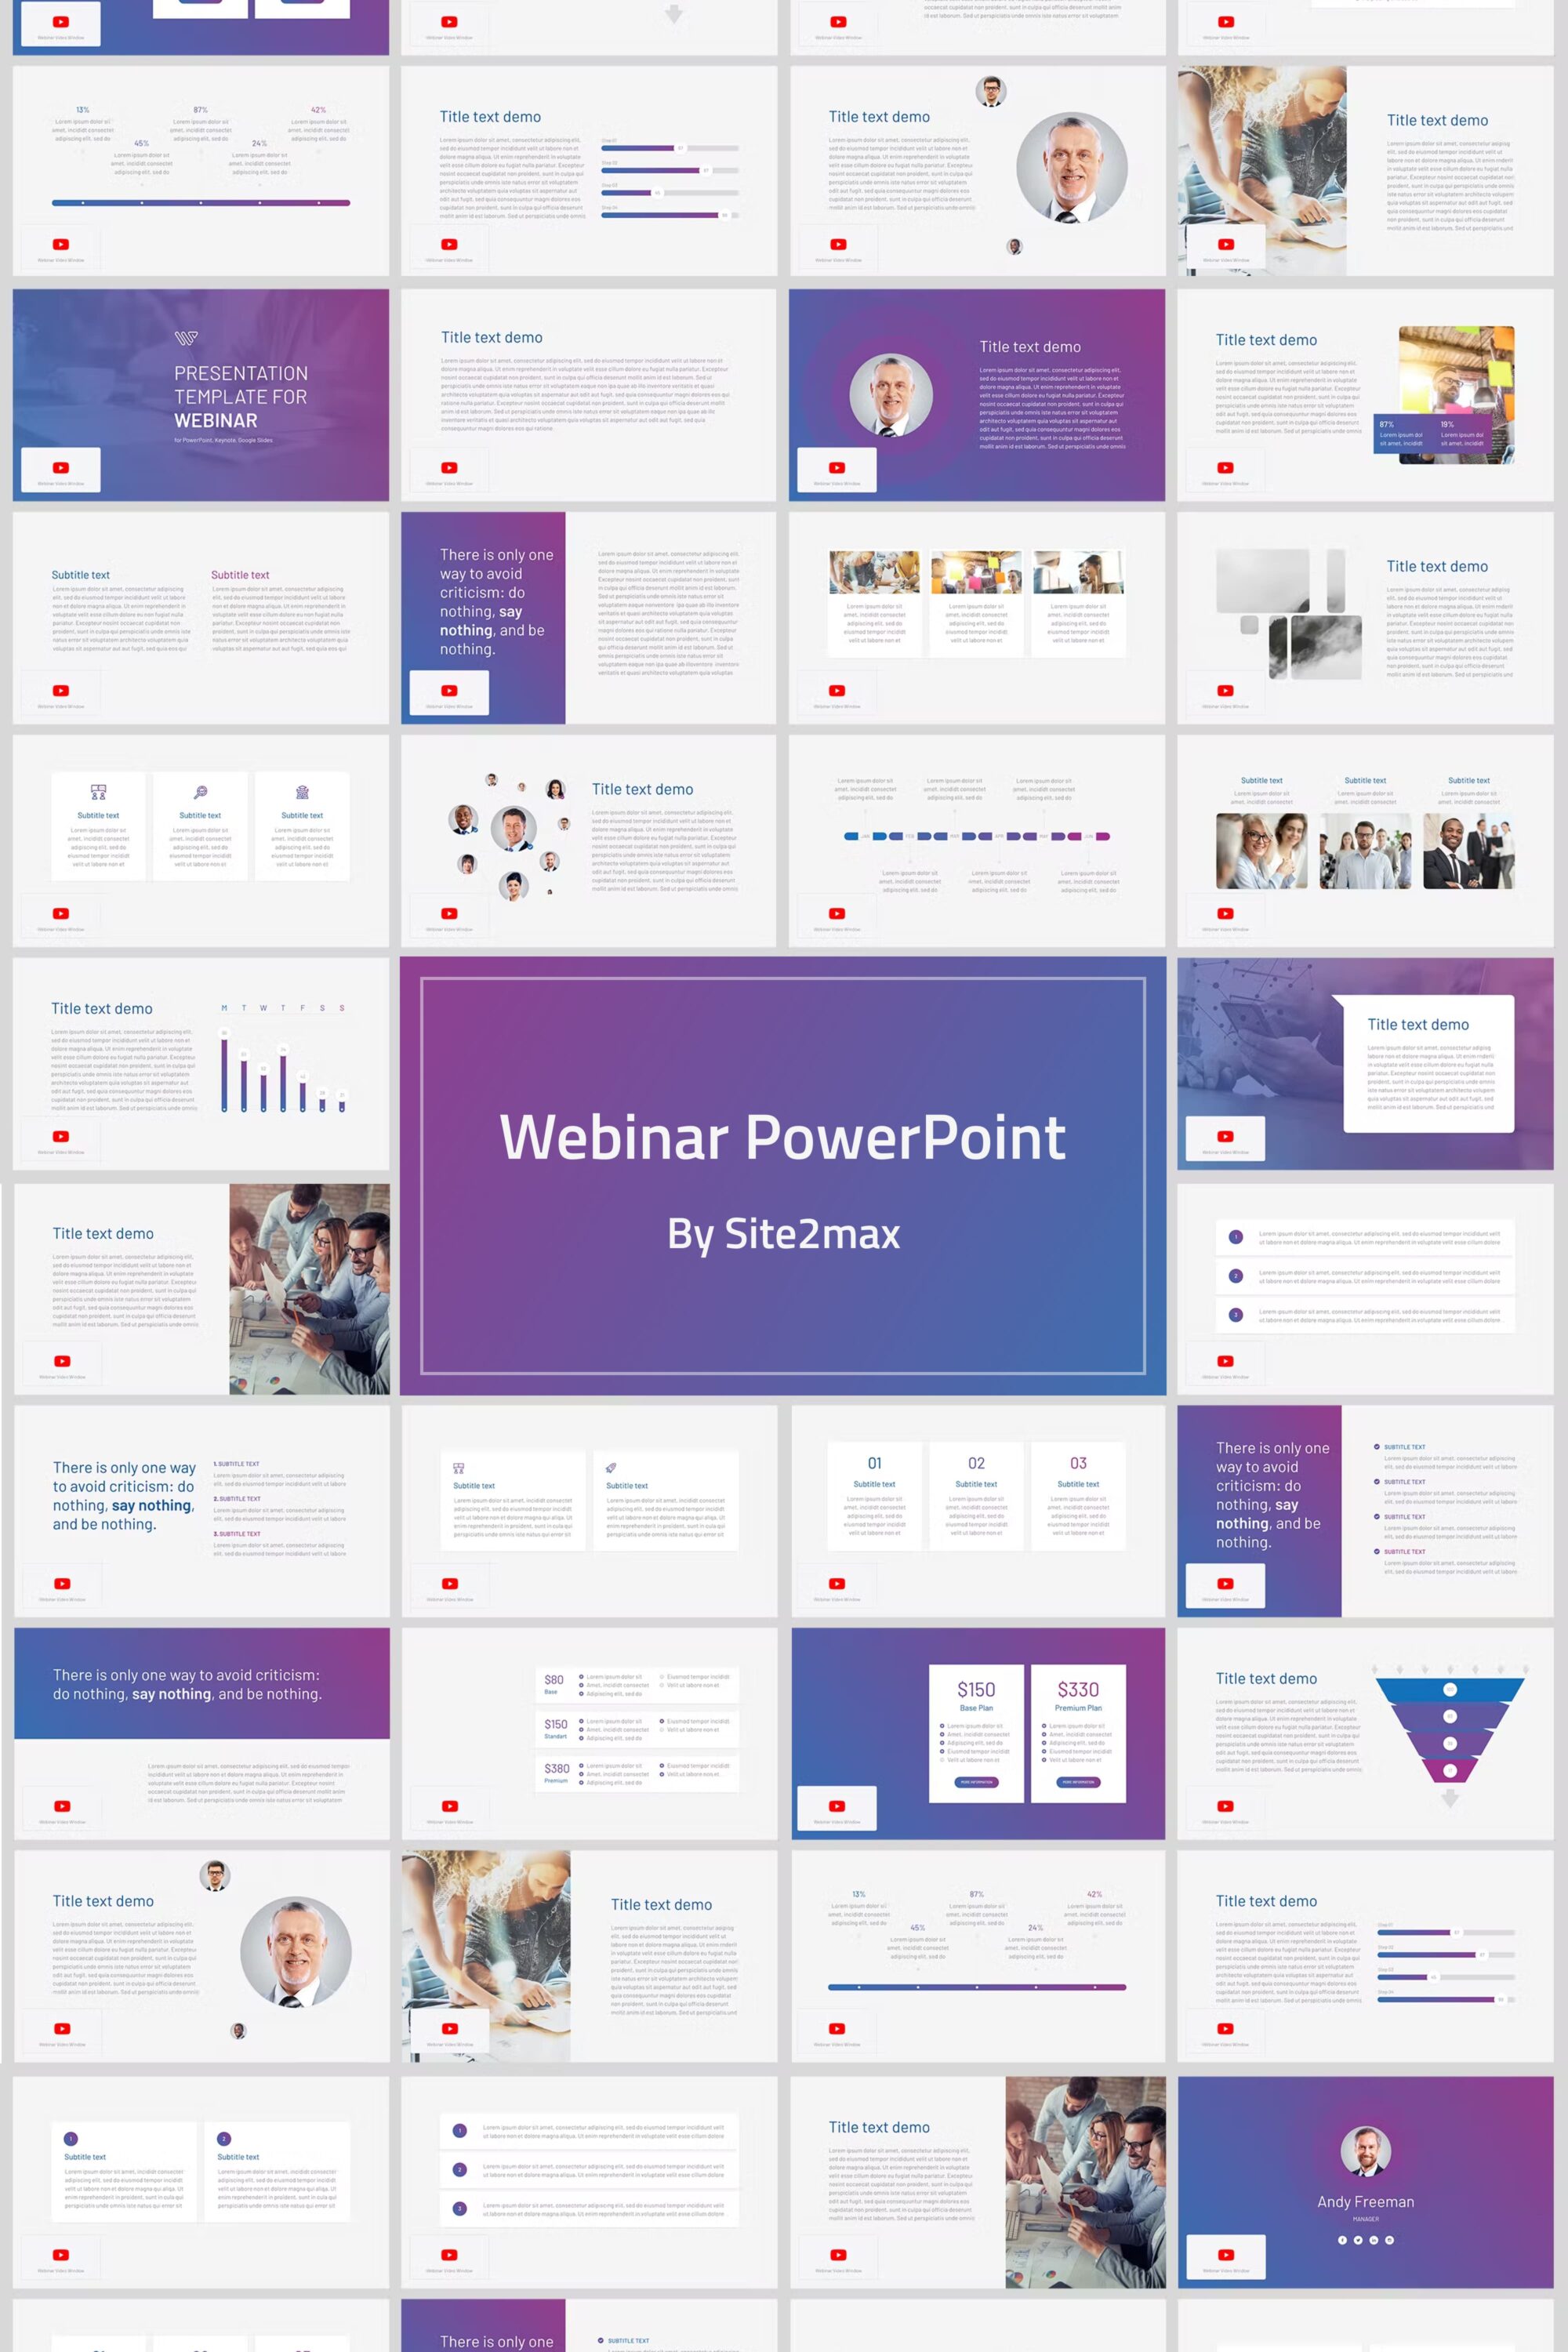 Webinar PowerPoint - pinterest image preview.